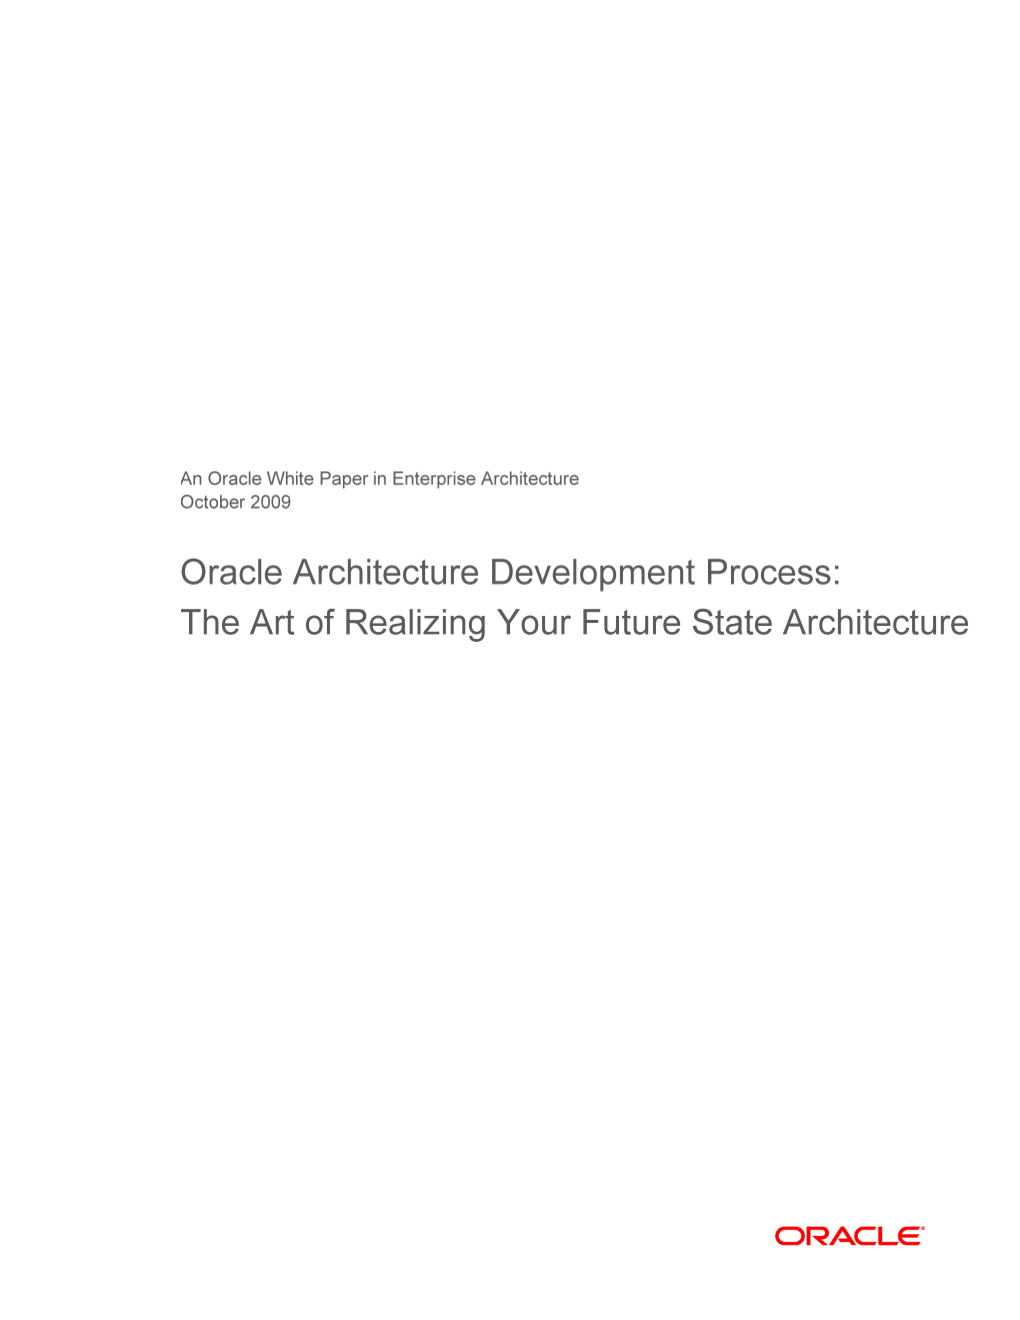 Oracle Architecture Development Process (OADP)